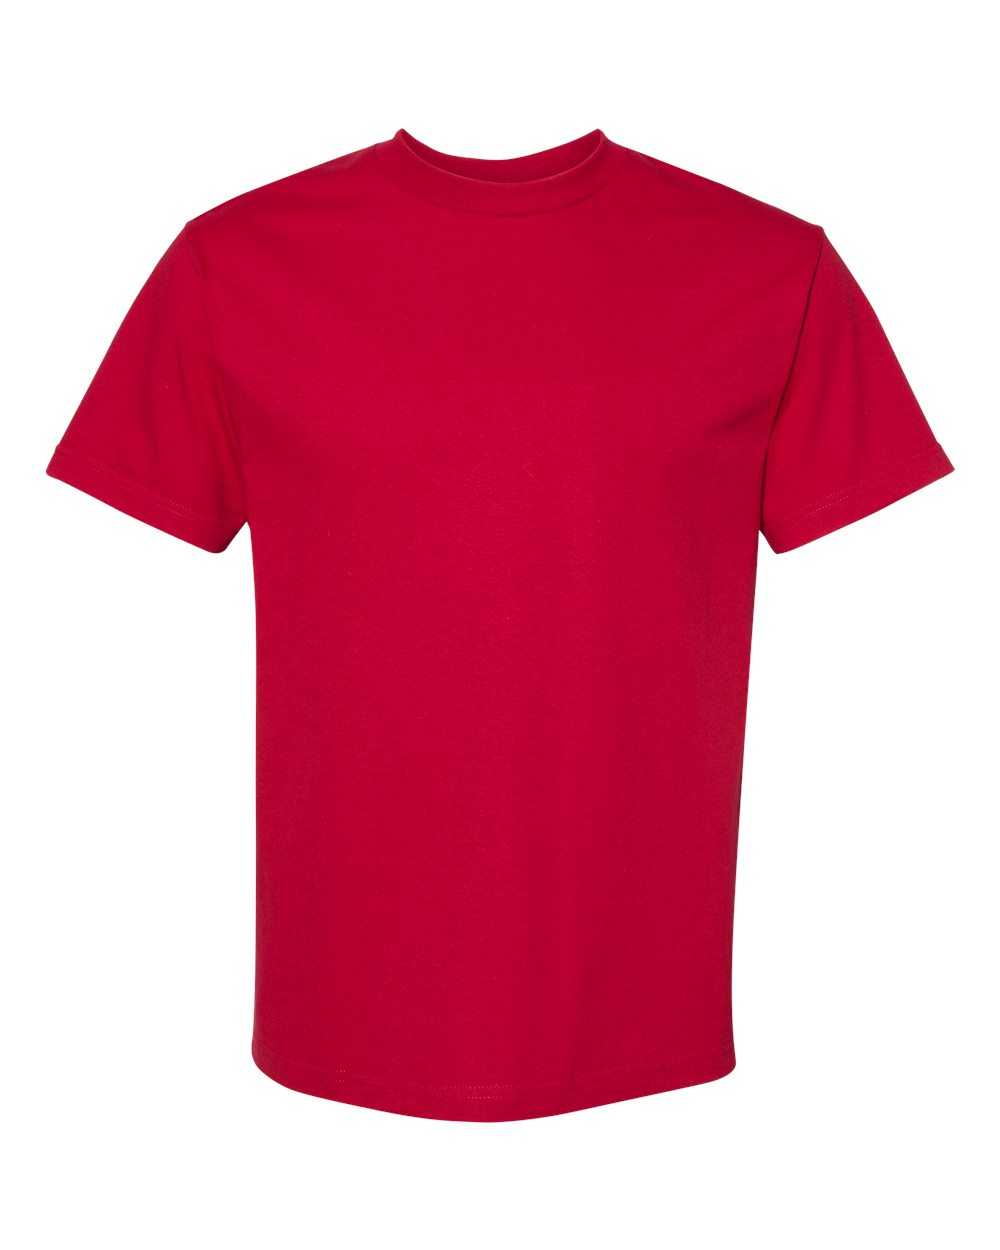 American Apparel 1301 Unisex Heavyweight Cotton T-Shirt - Cardinal - HIT a Double